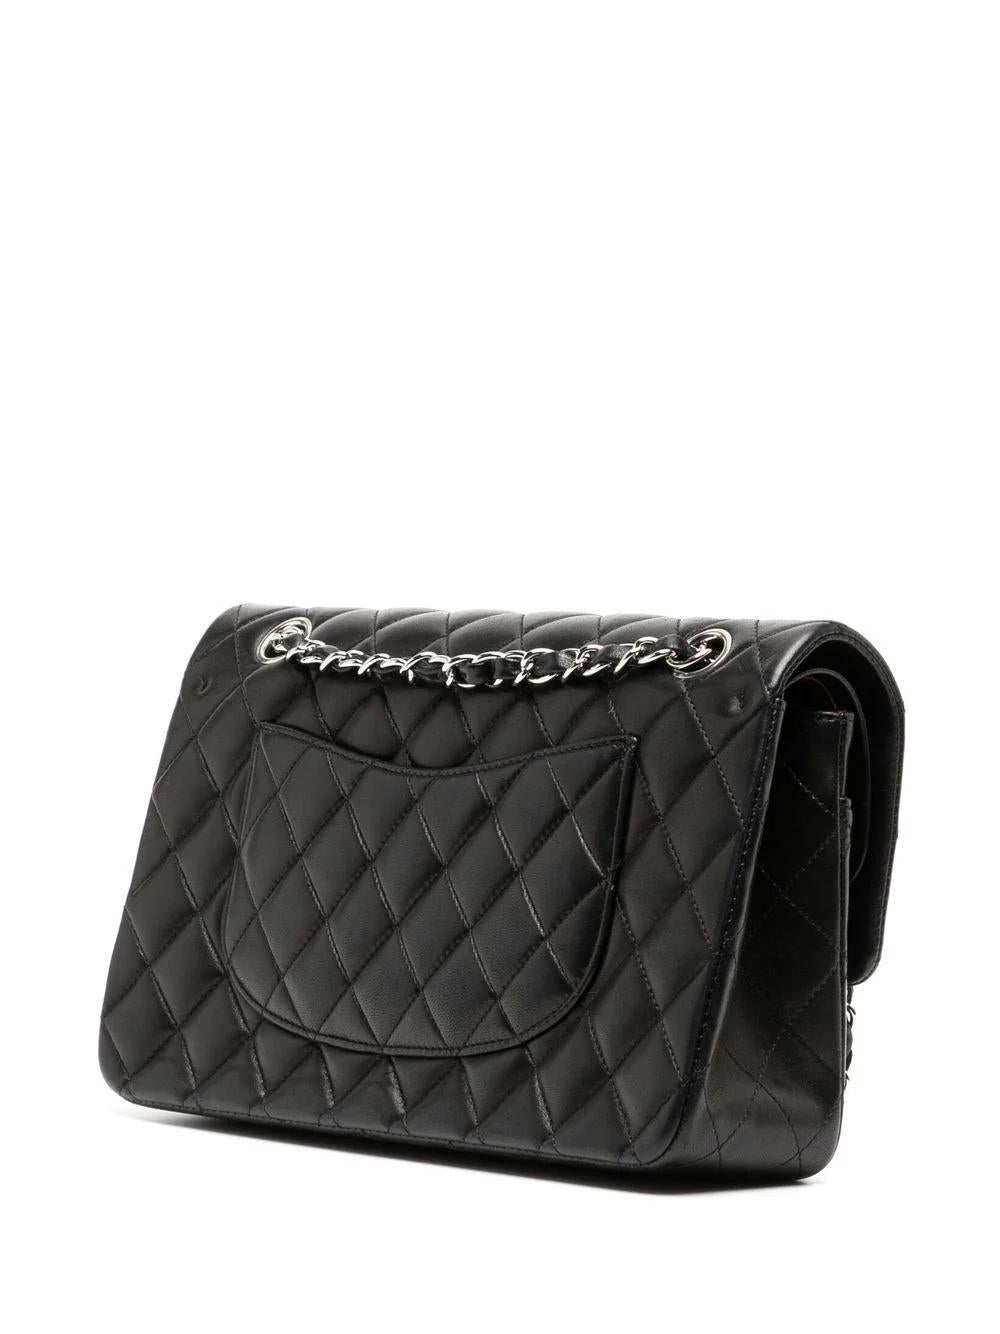 Chanel 2006 Vintage 2.55 Quilted Lambskin Medium Classic Double Flap Bag  en vente 1